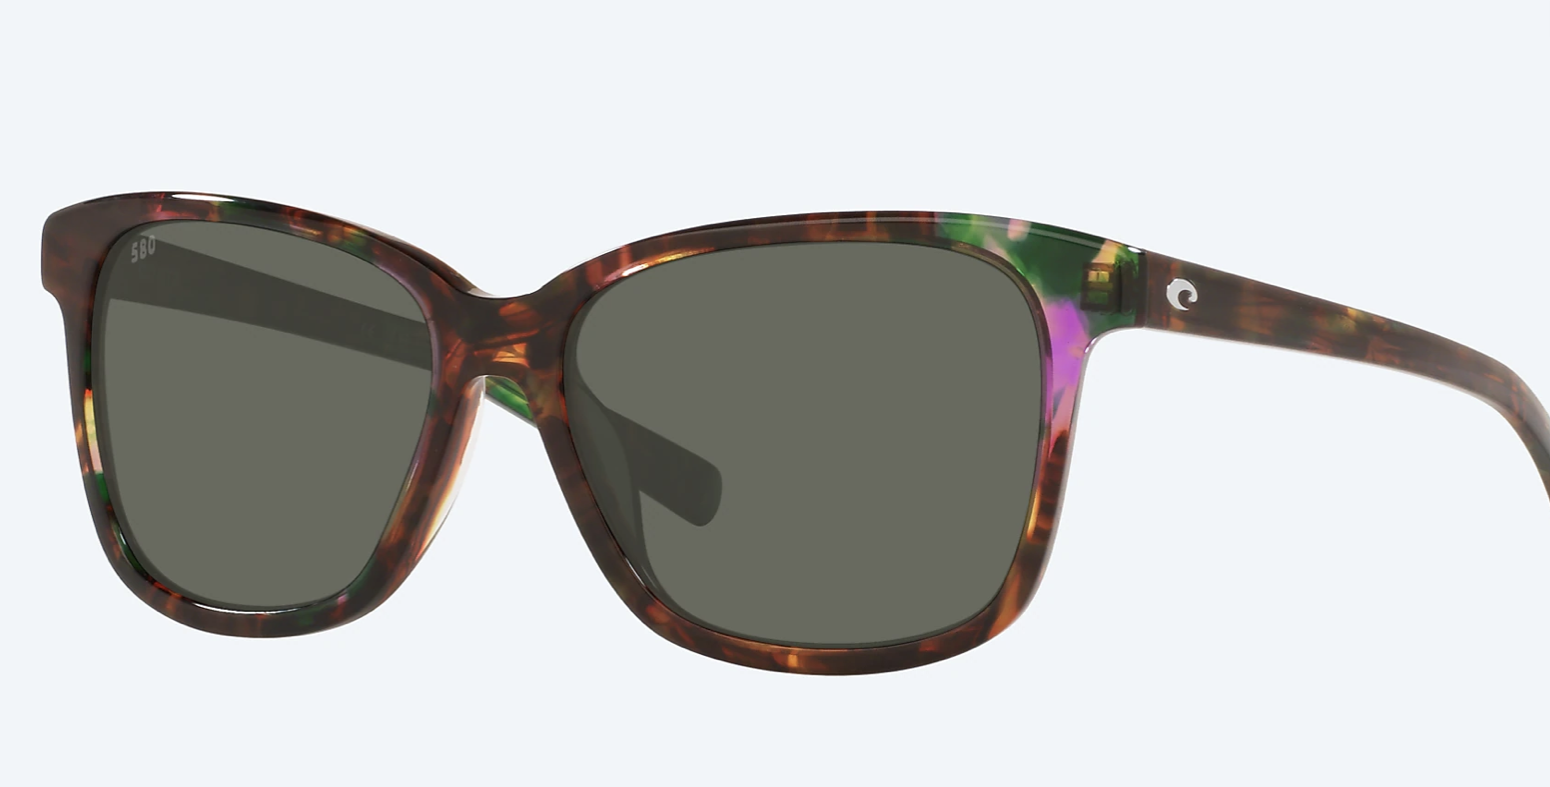 Costa May sunglasses- $242